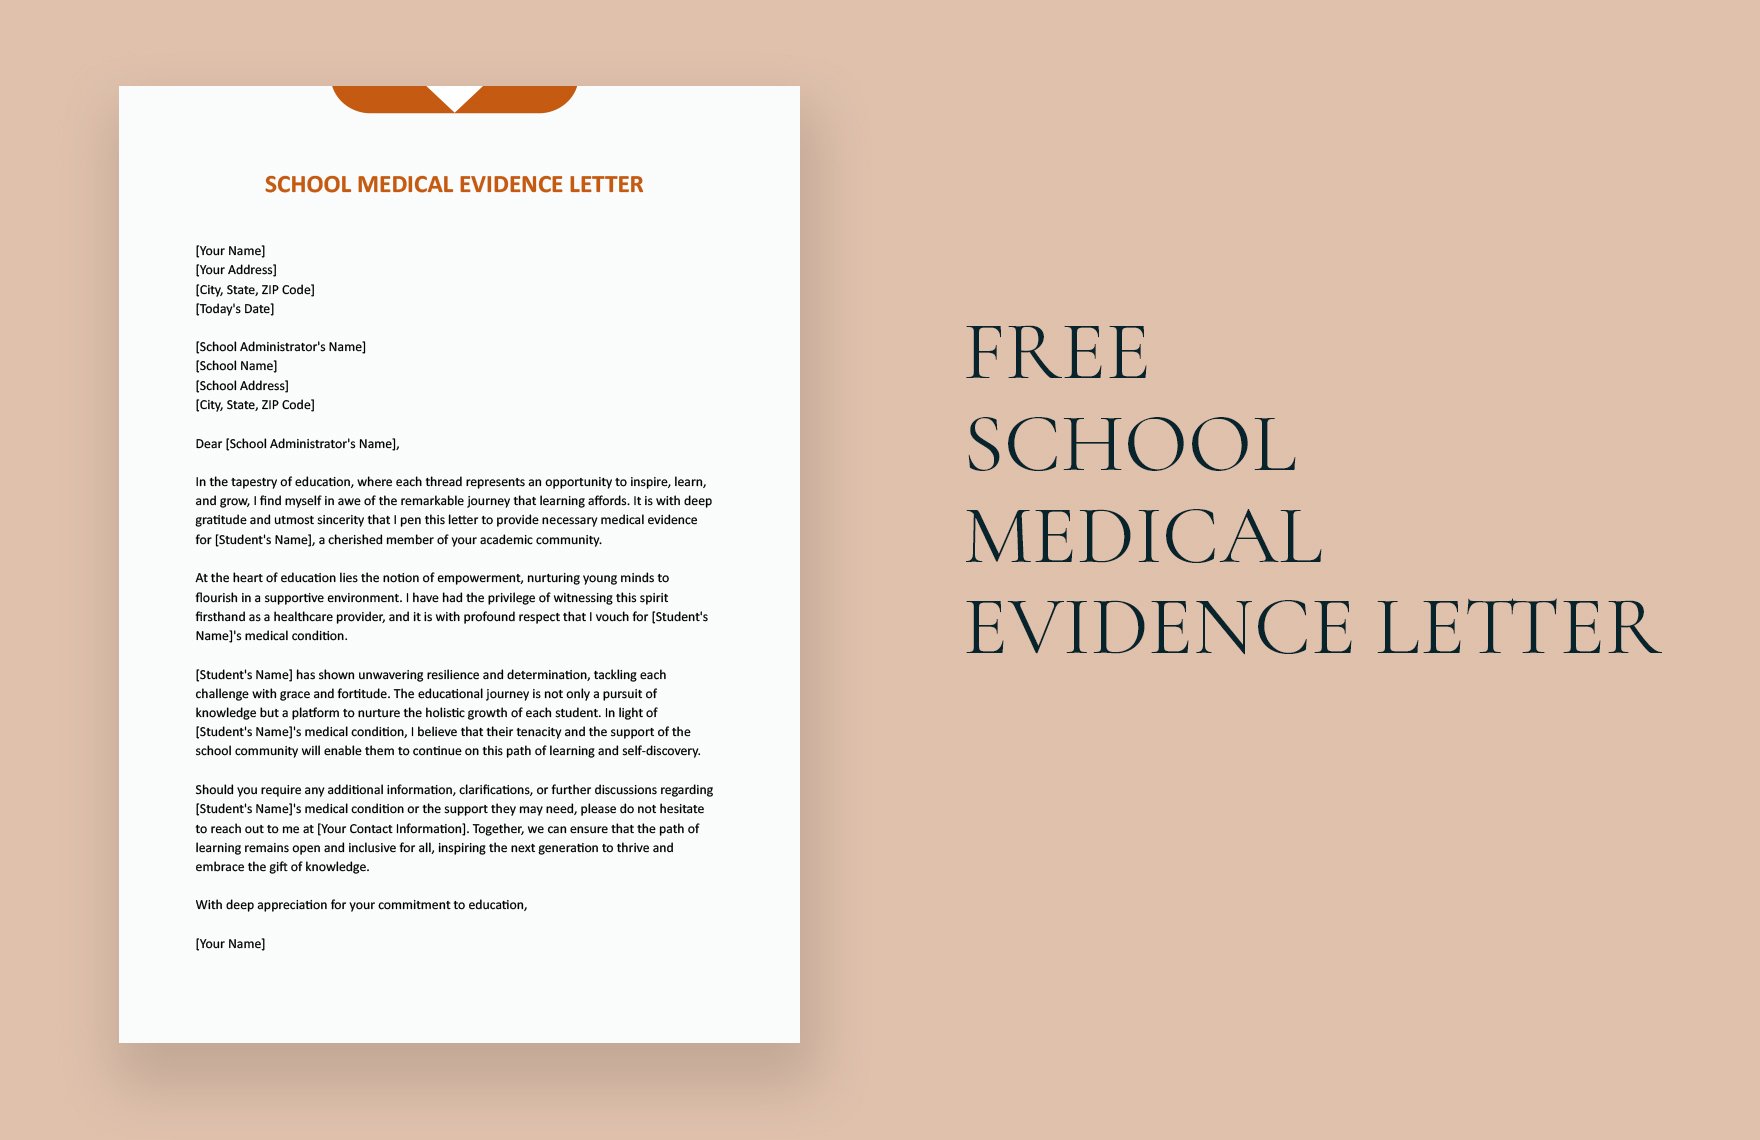 School Medical Evidence Letter in Word, Google Docs